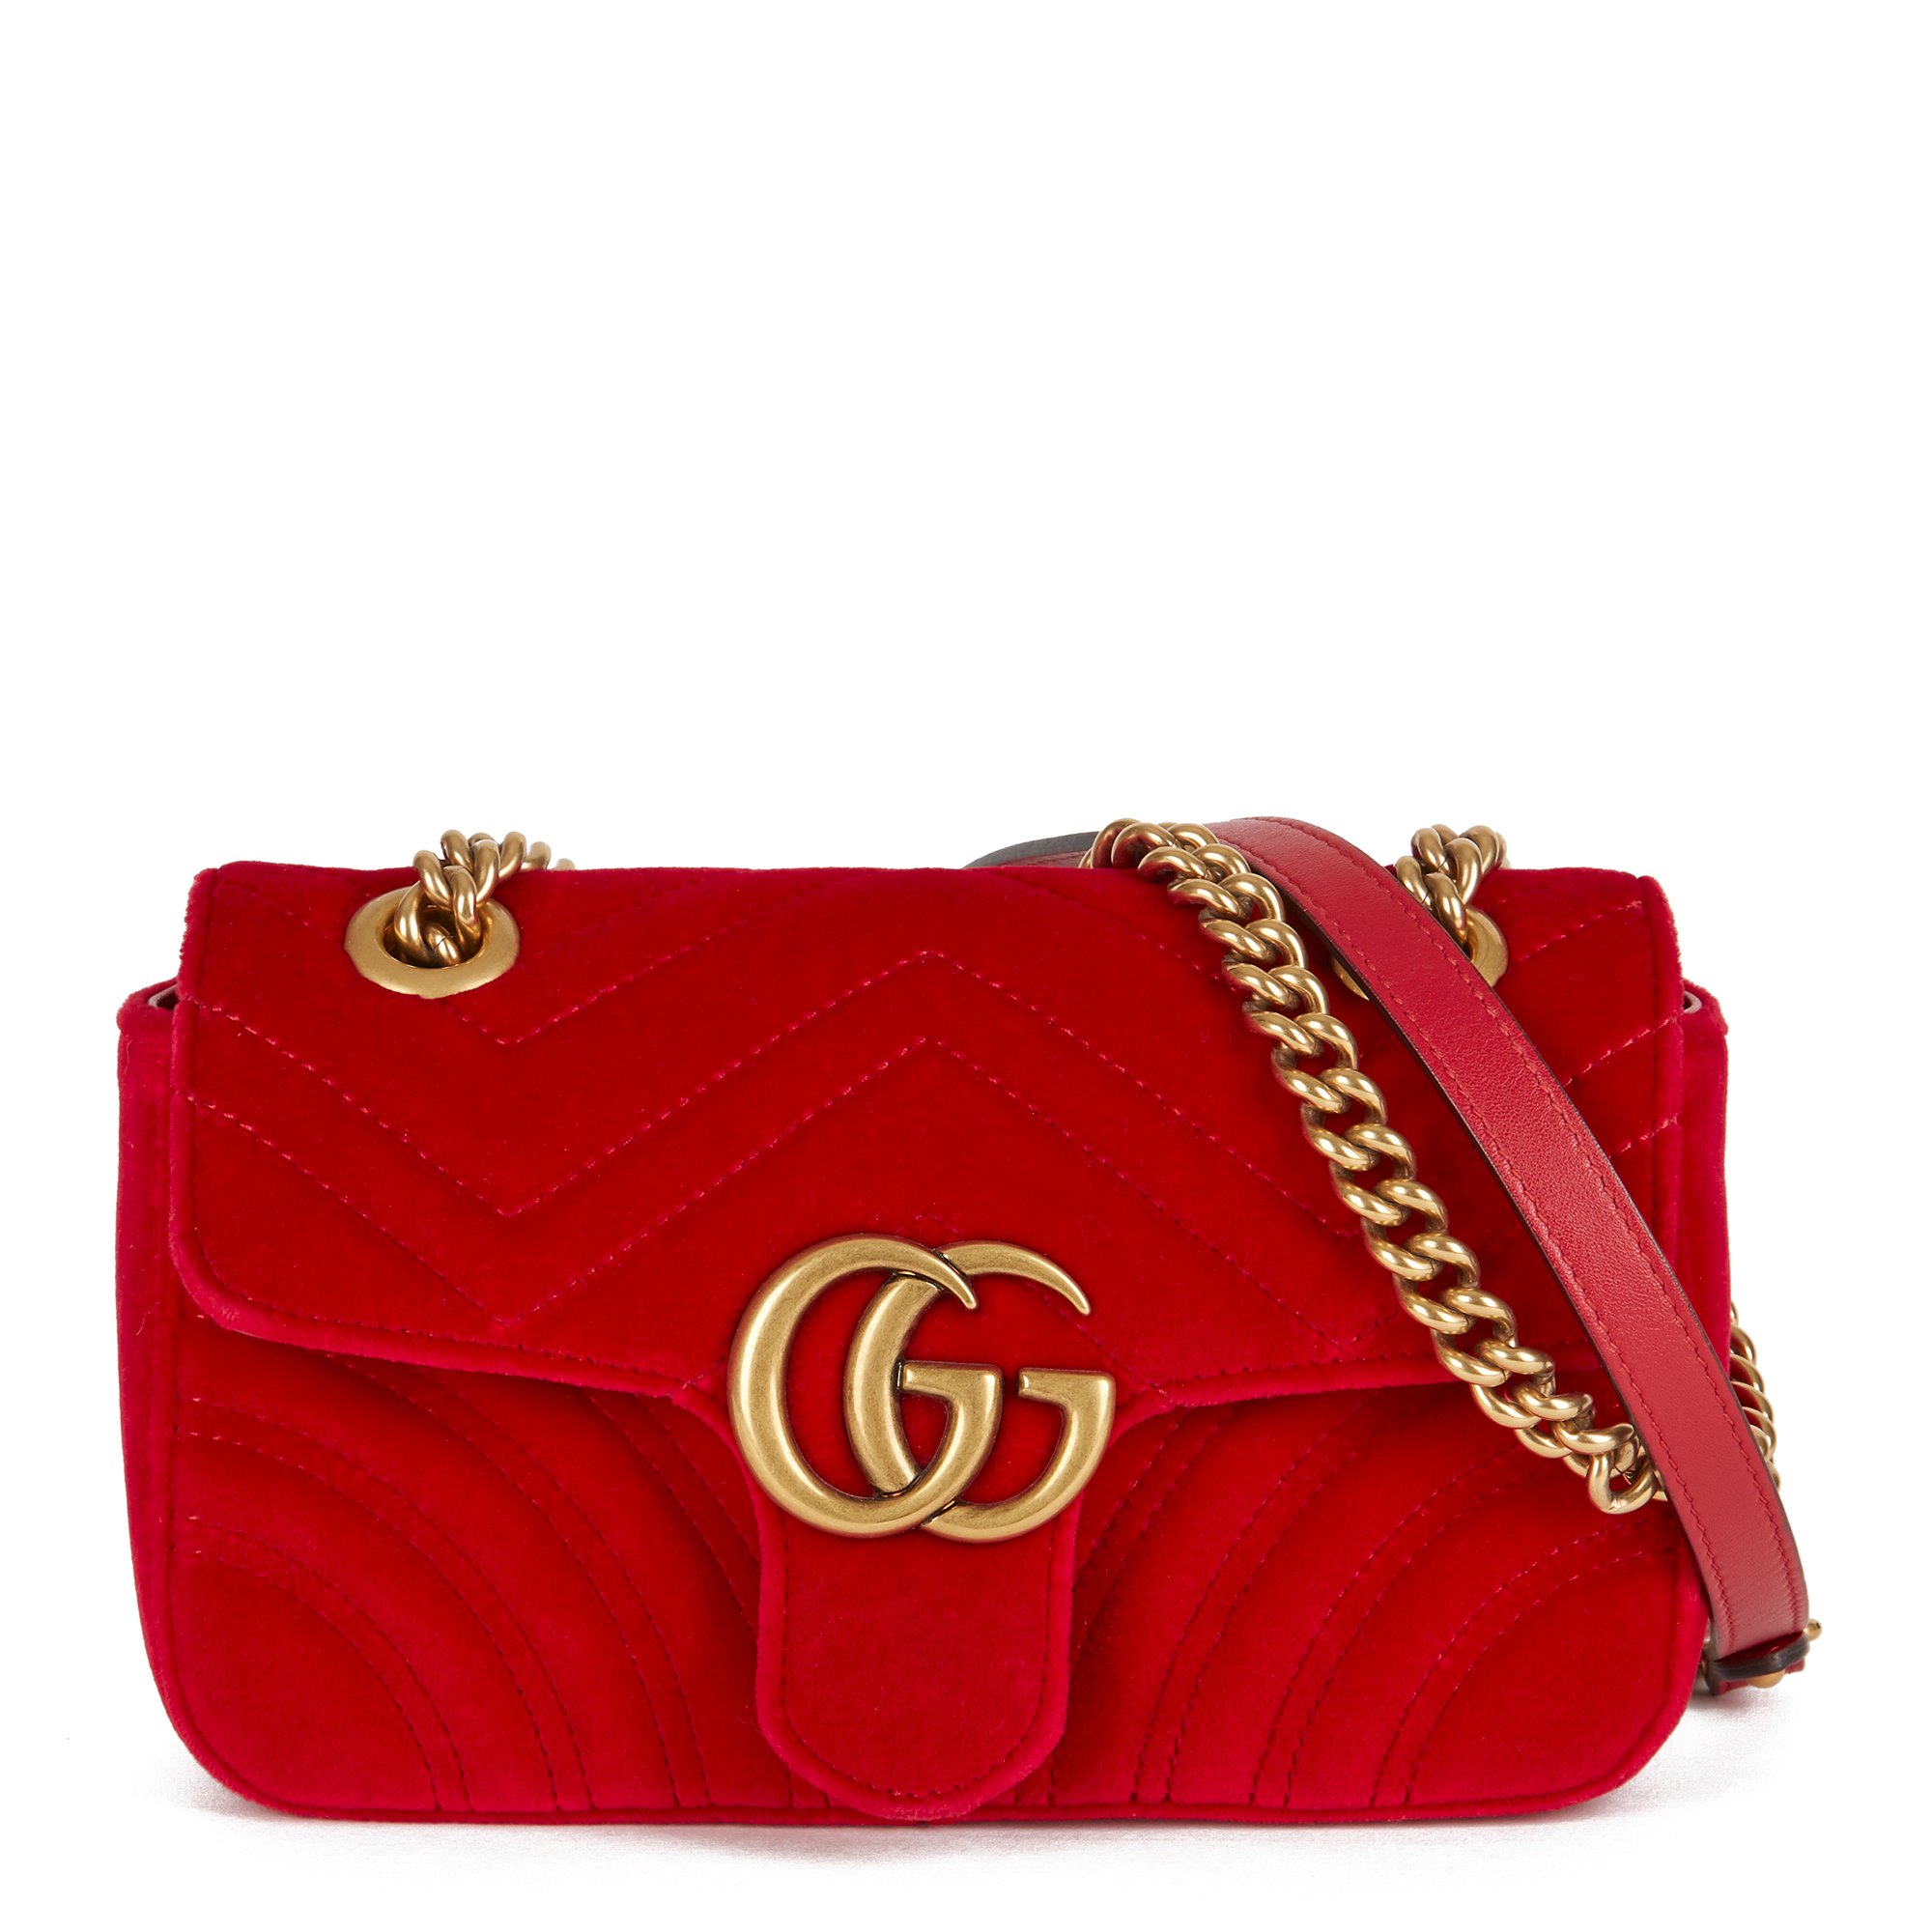 Second Hand Gucci Handbags Uk Daily | semashow.com